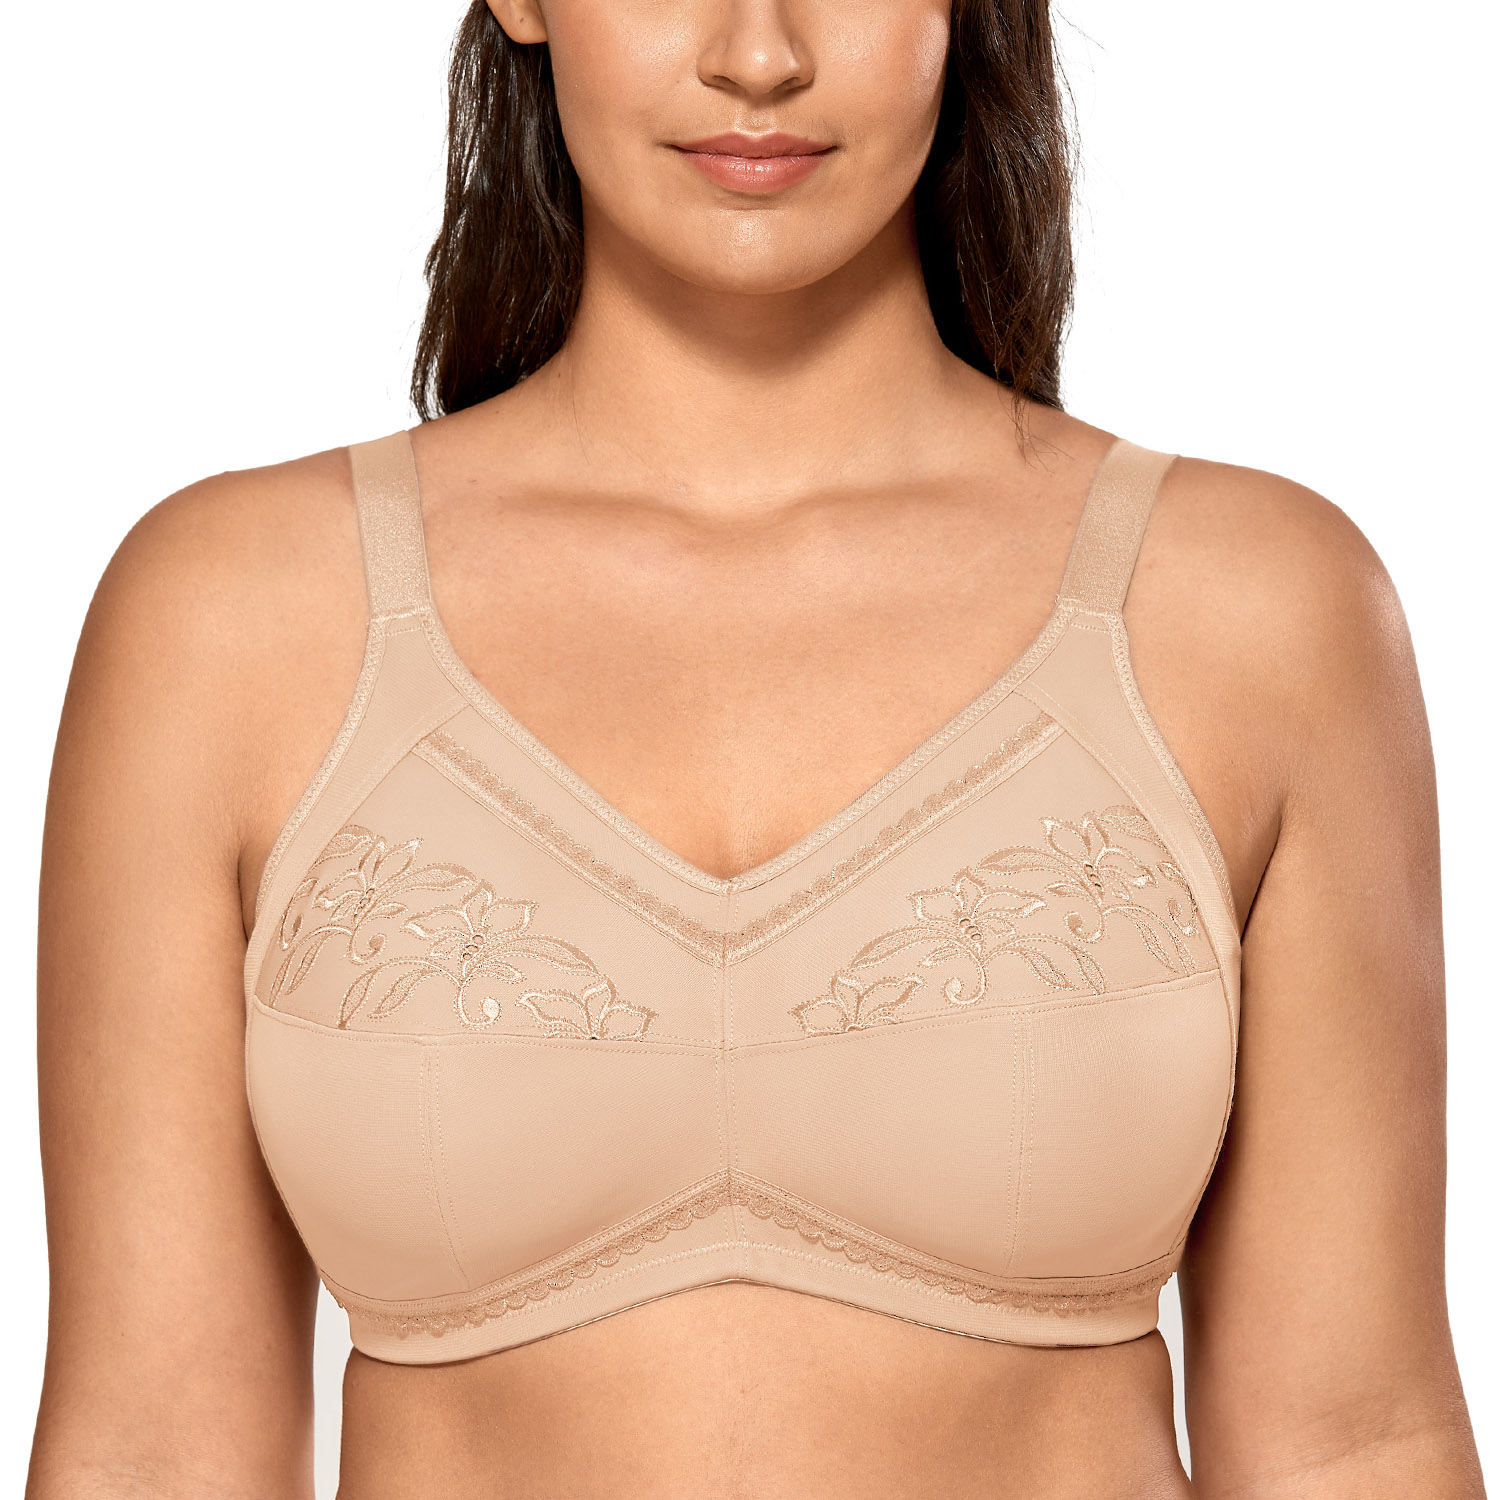 Delimira Lingerie - Bundle & Save! Buy 2 bras,get 25% off with